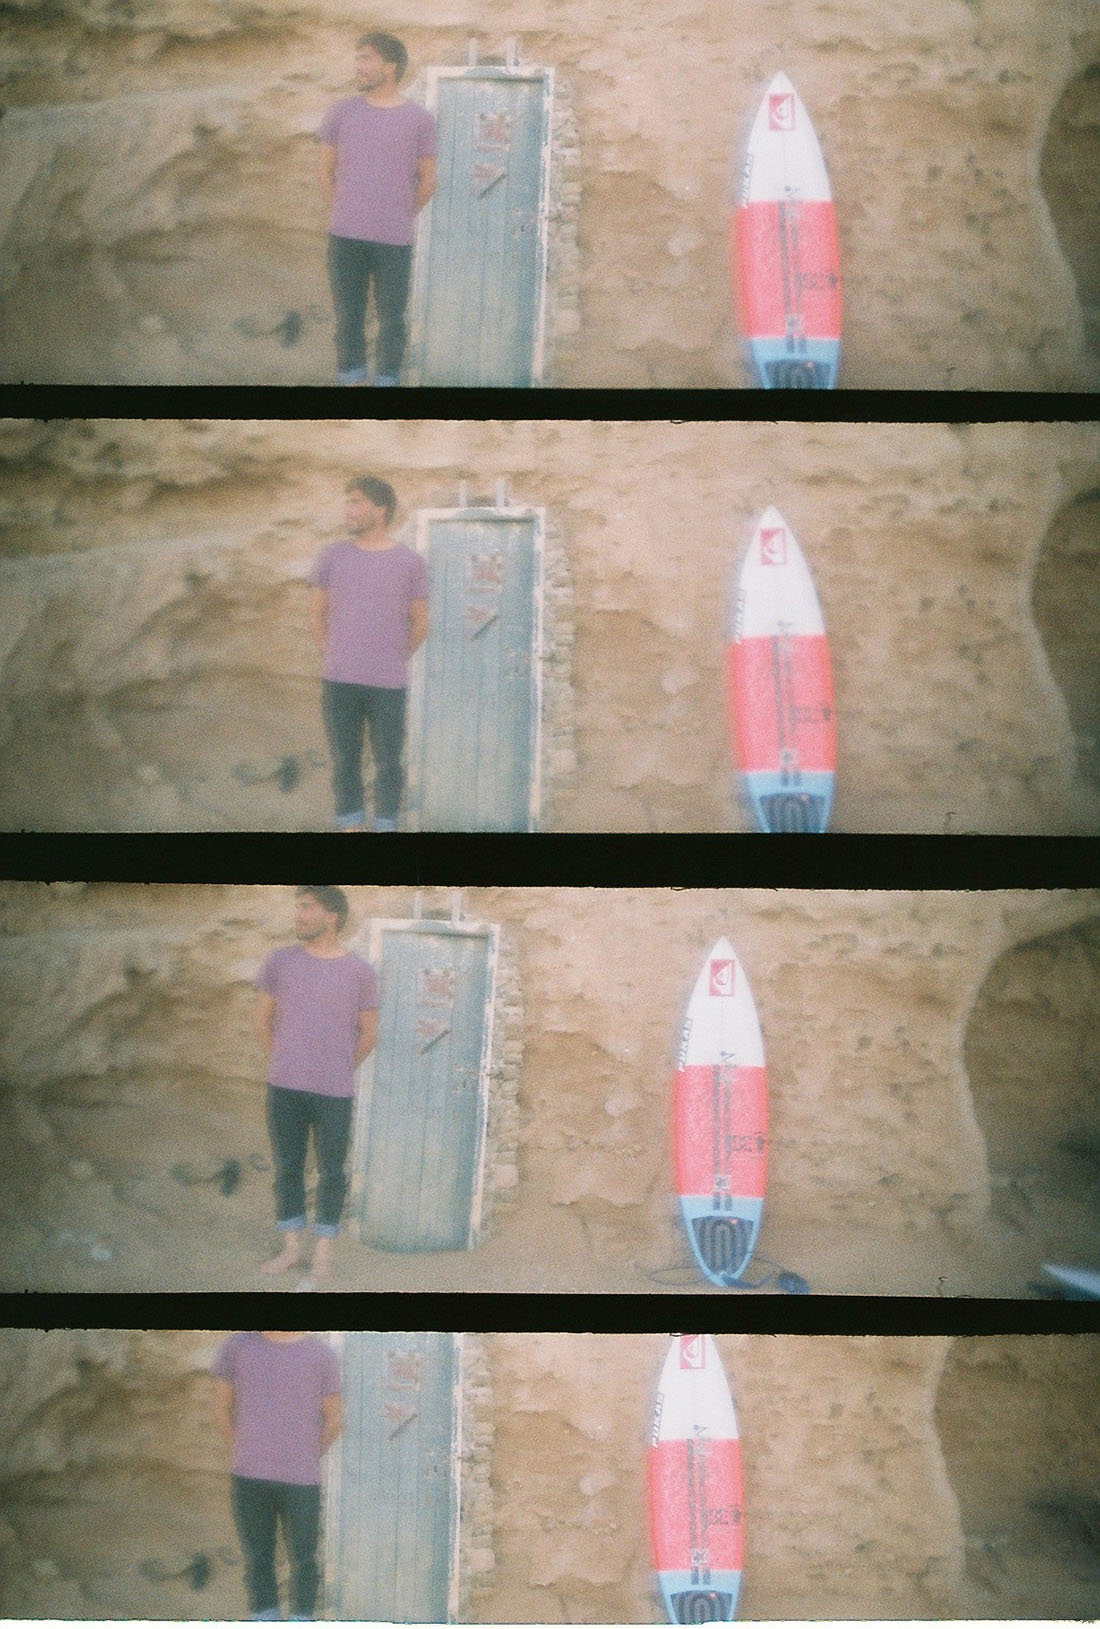 Pukas Surf Surfboards Foamball Aritz Aranburu test in Morocco